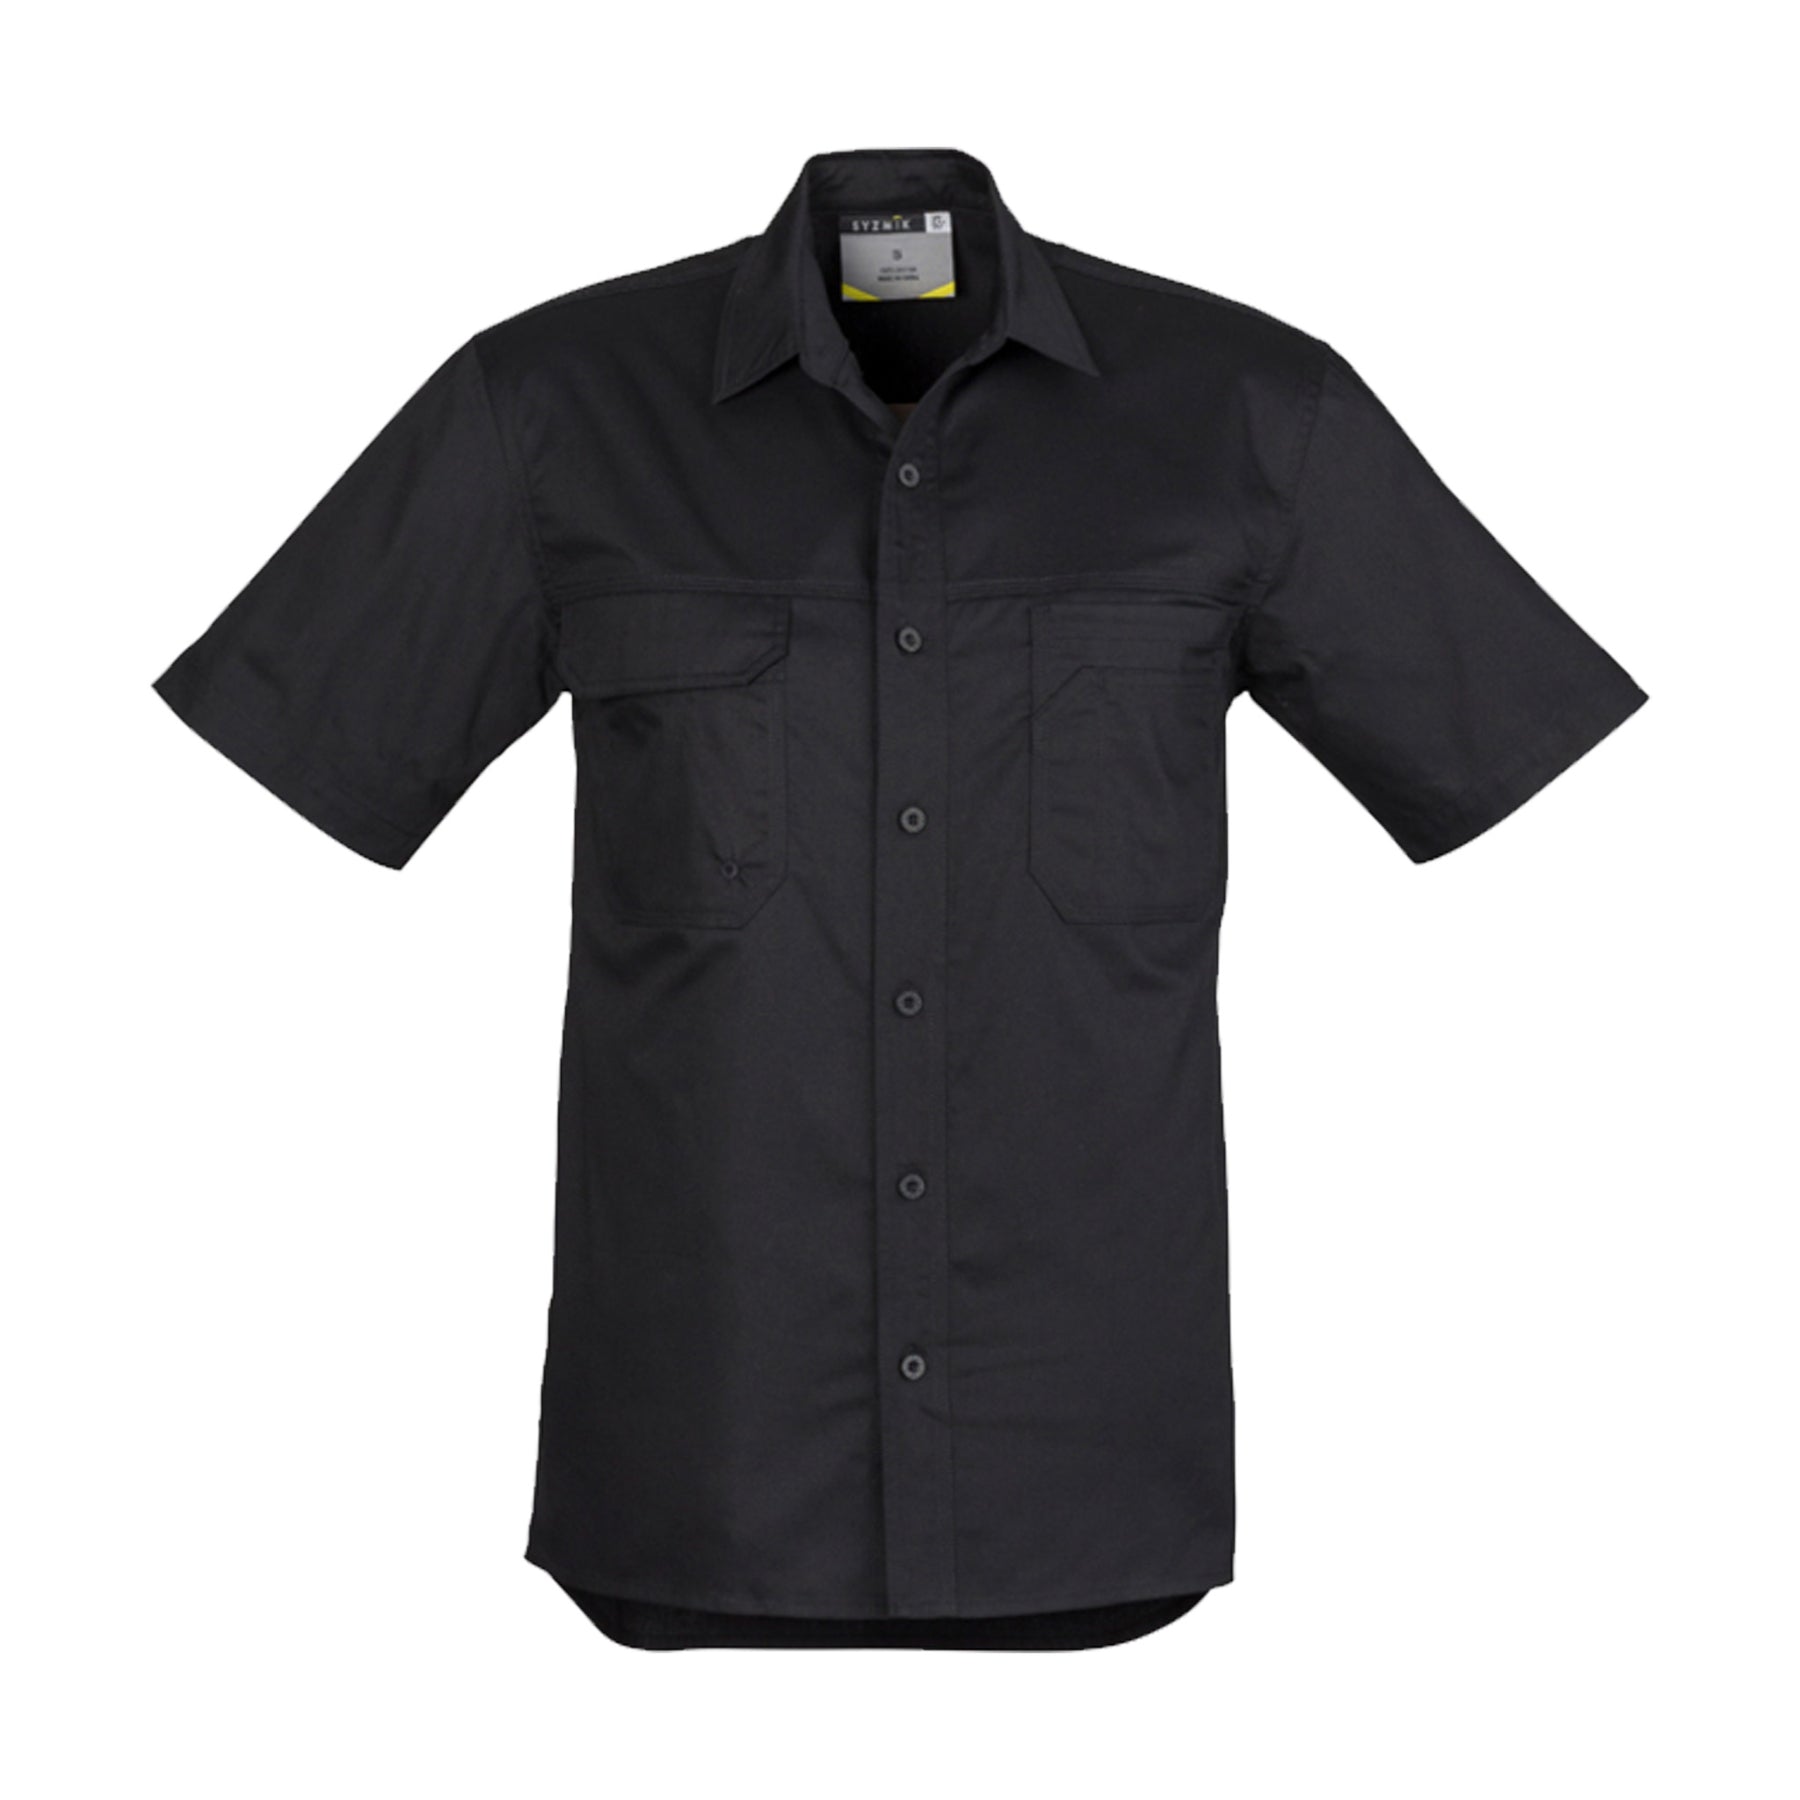 light weight short sleeve tradie shirt in black